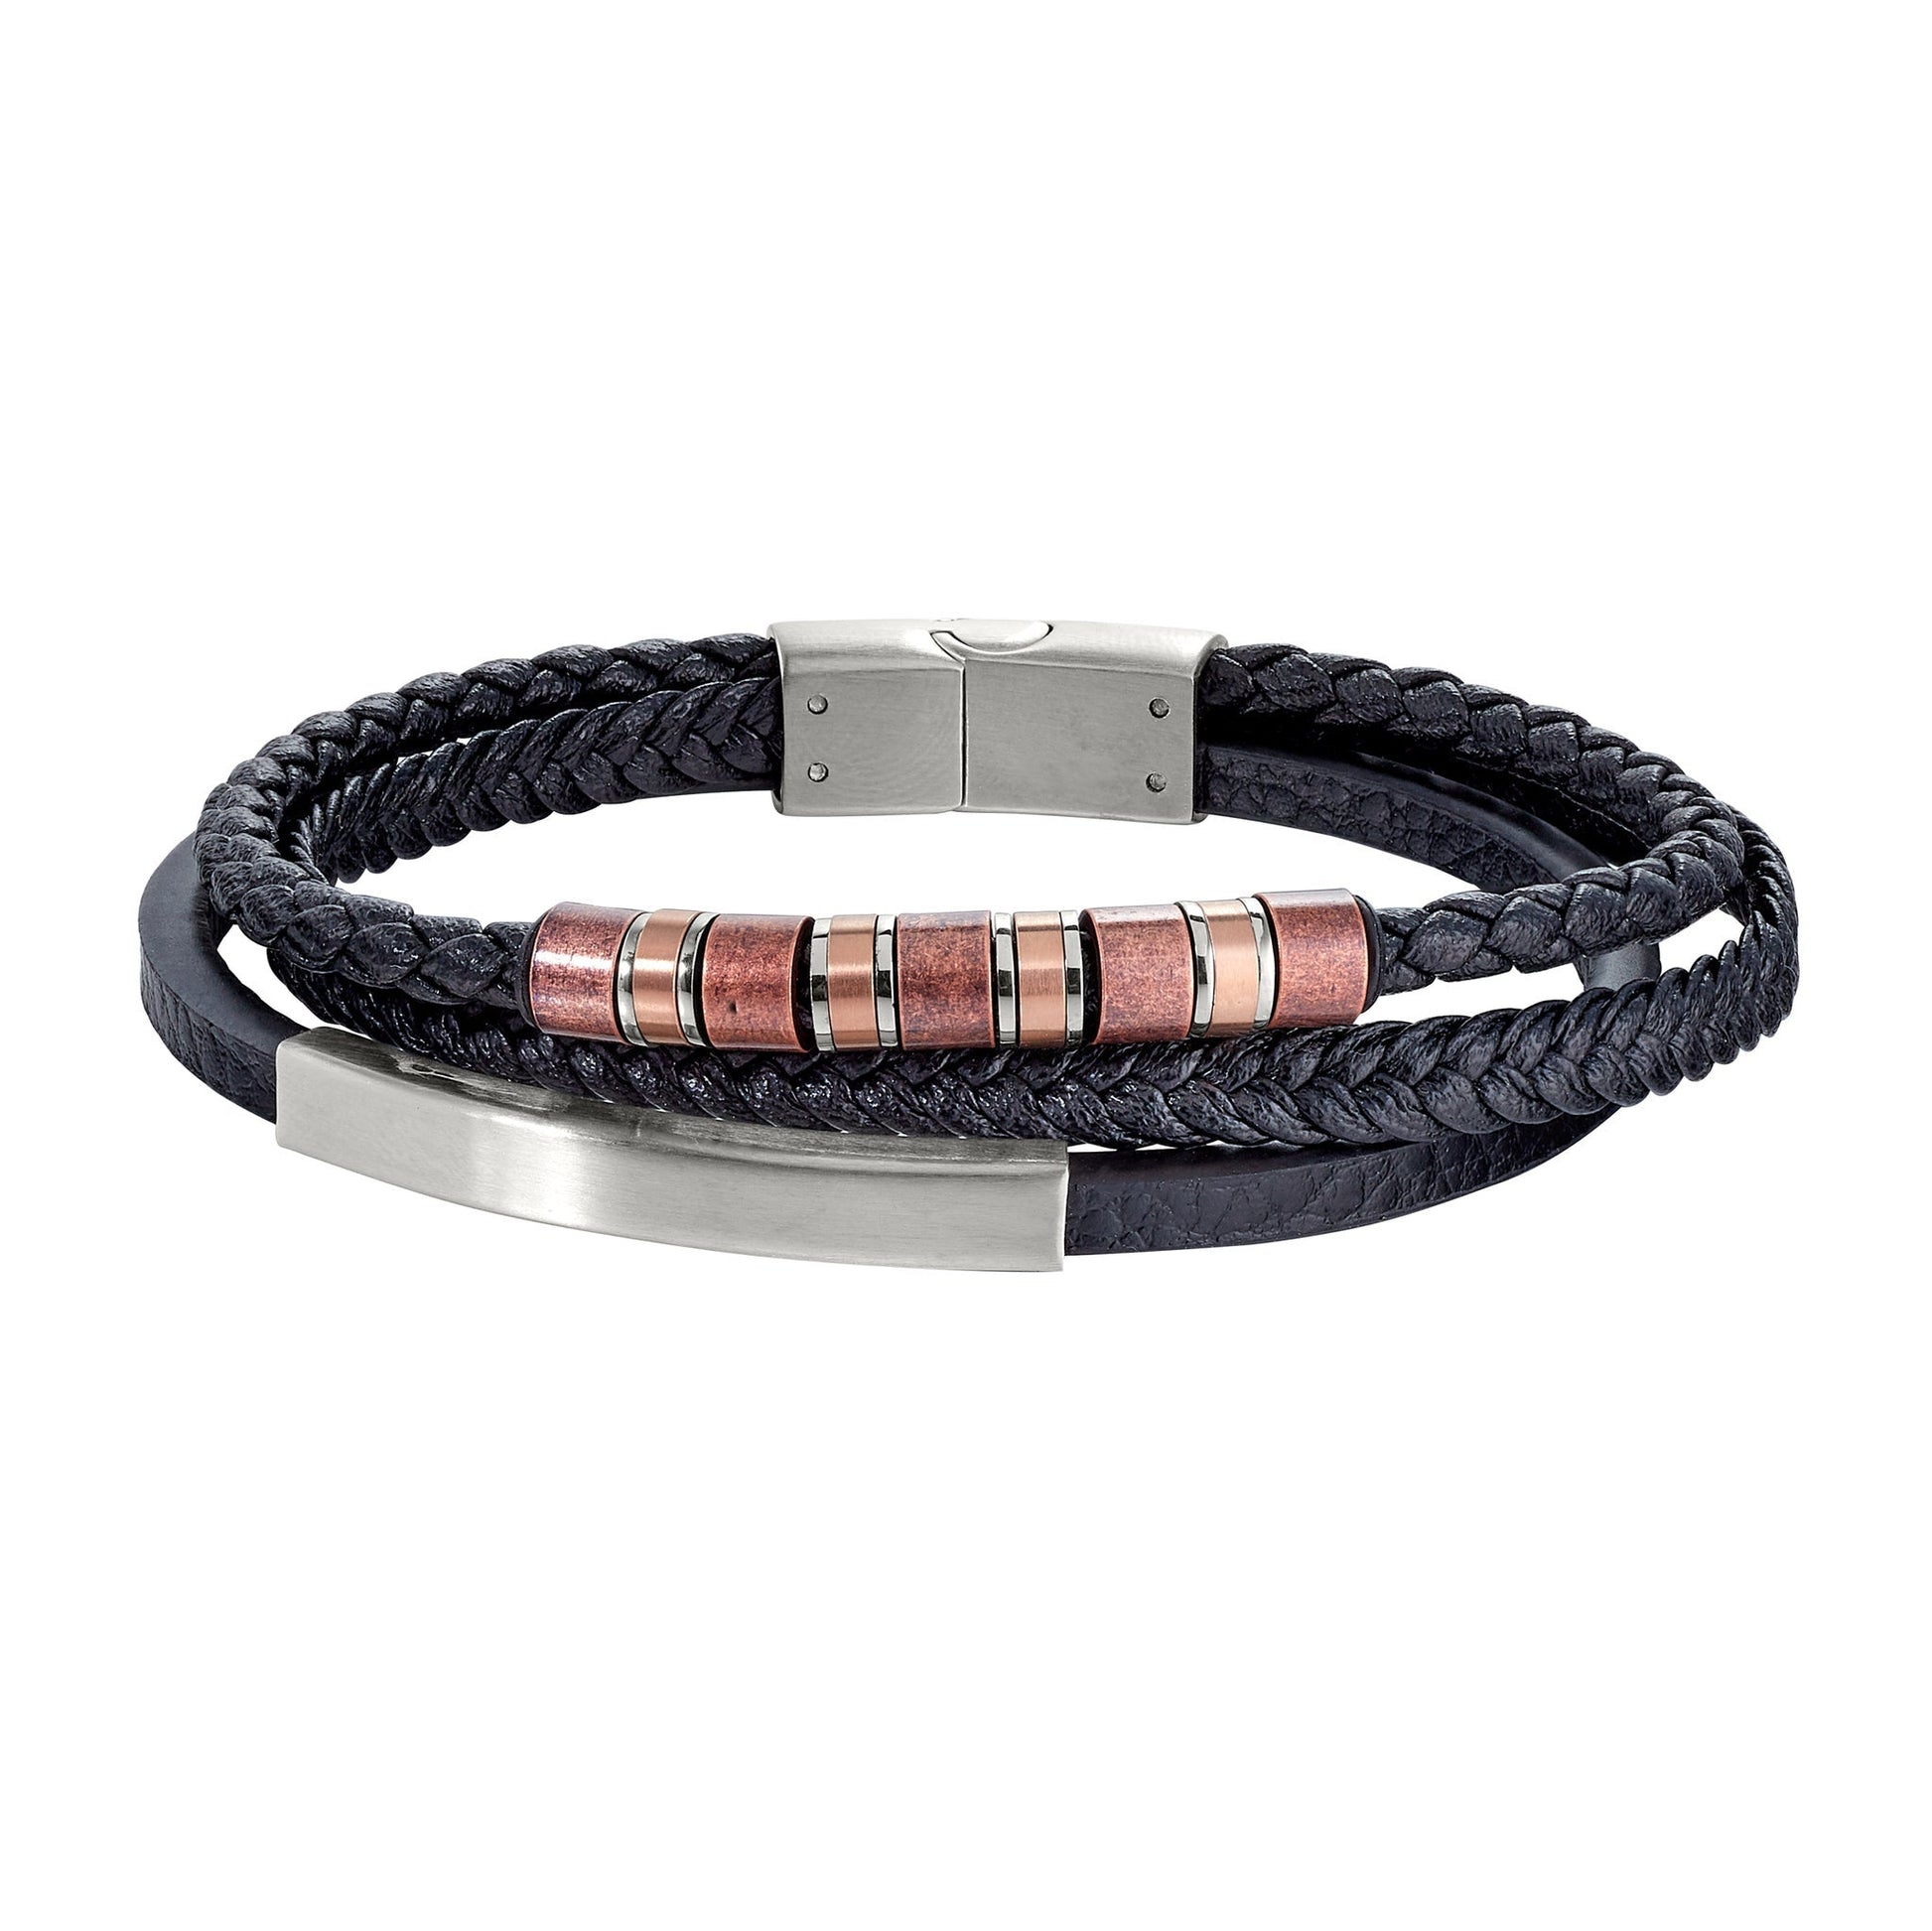 Shop Men's Cord and Leather Bracelets